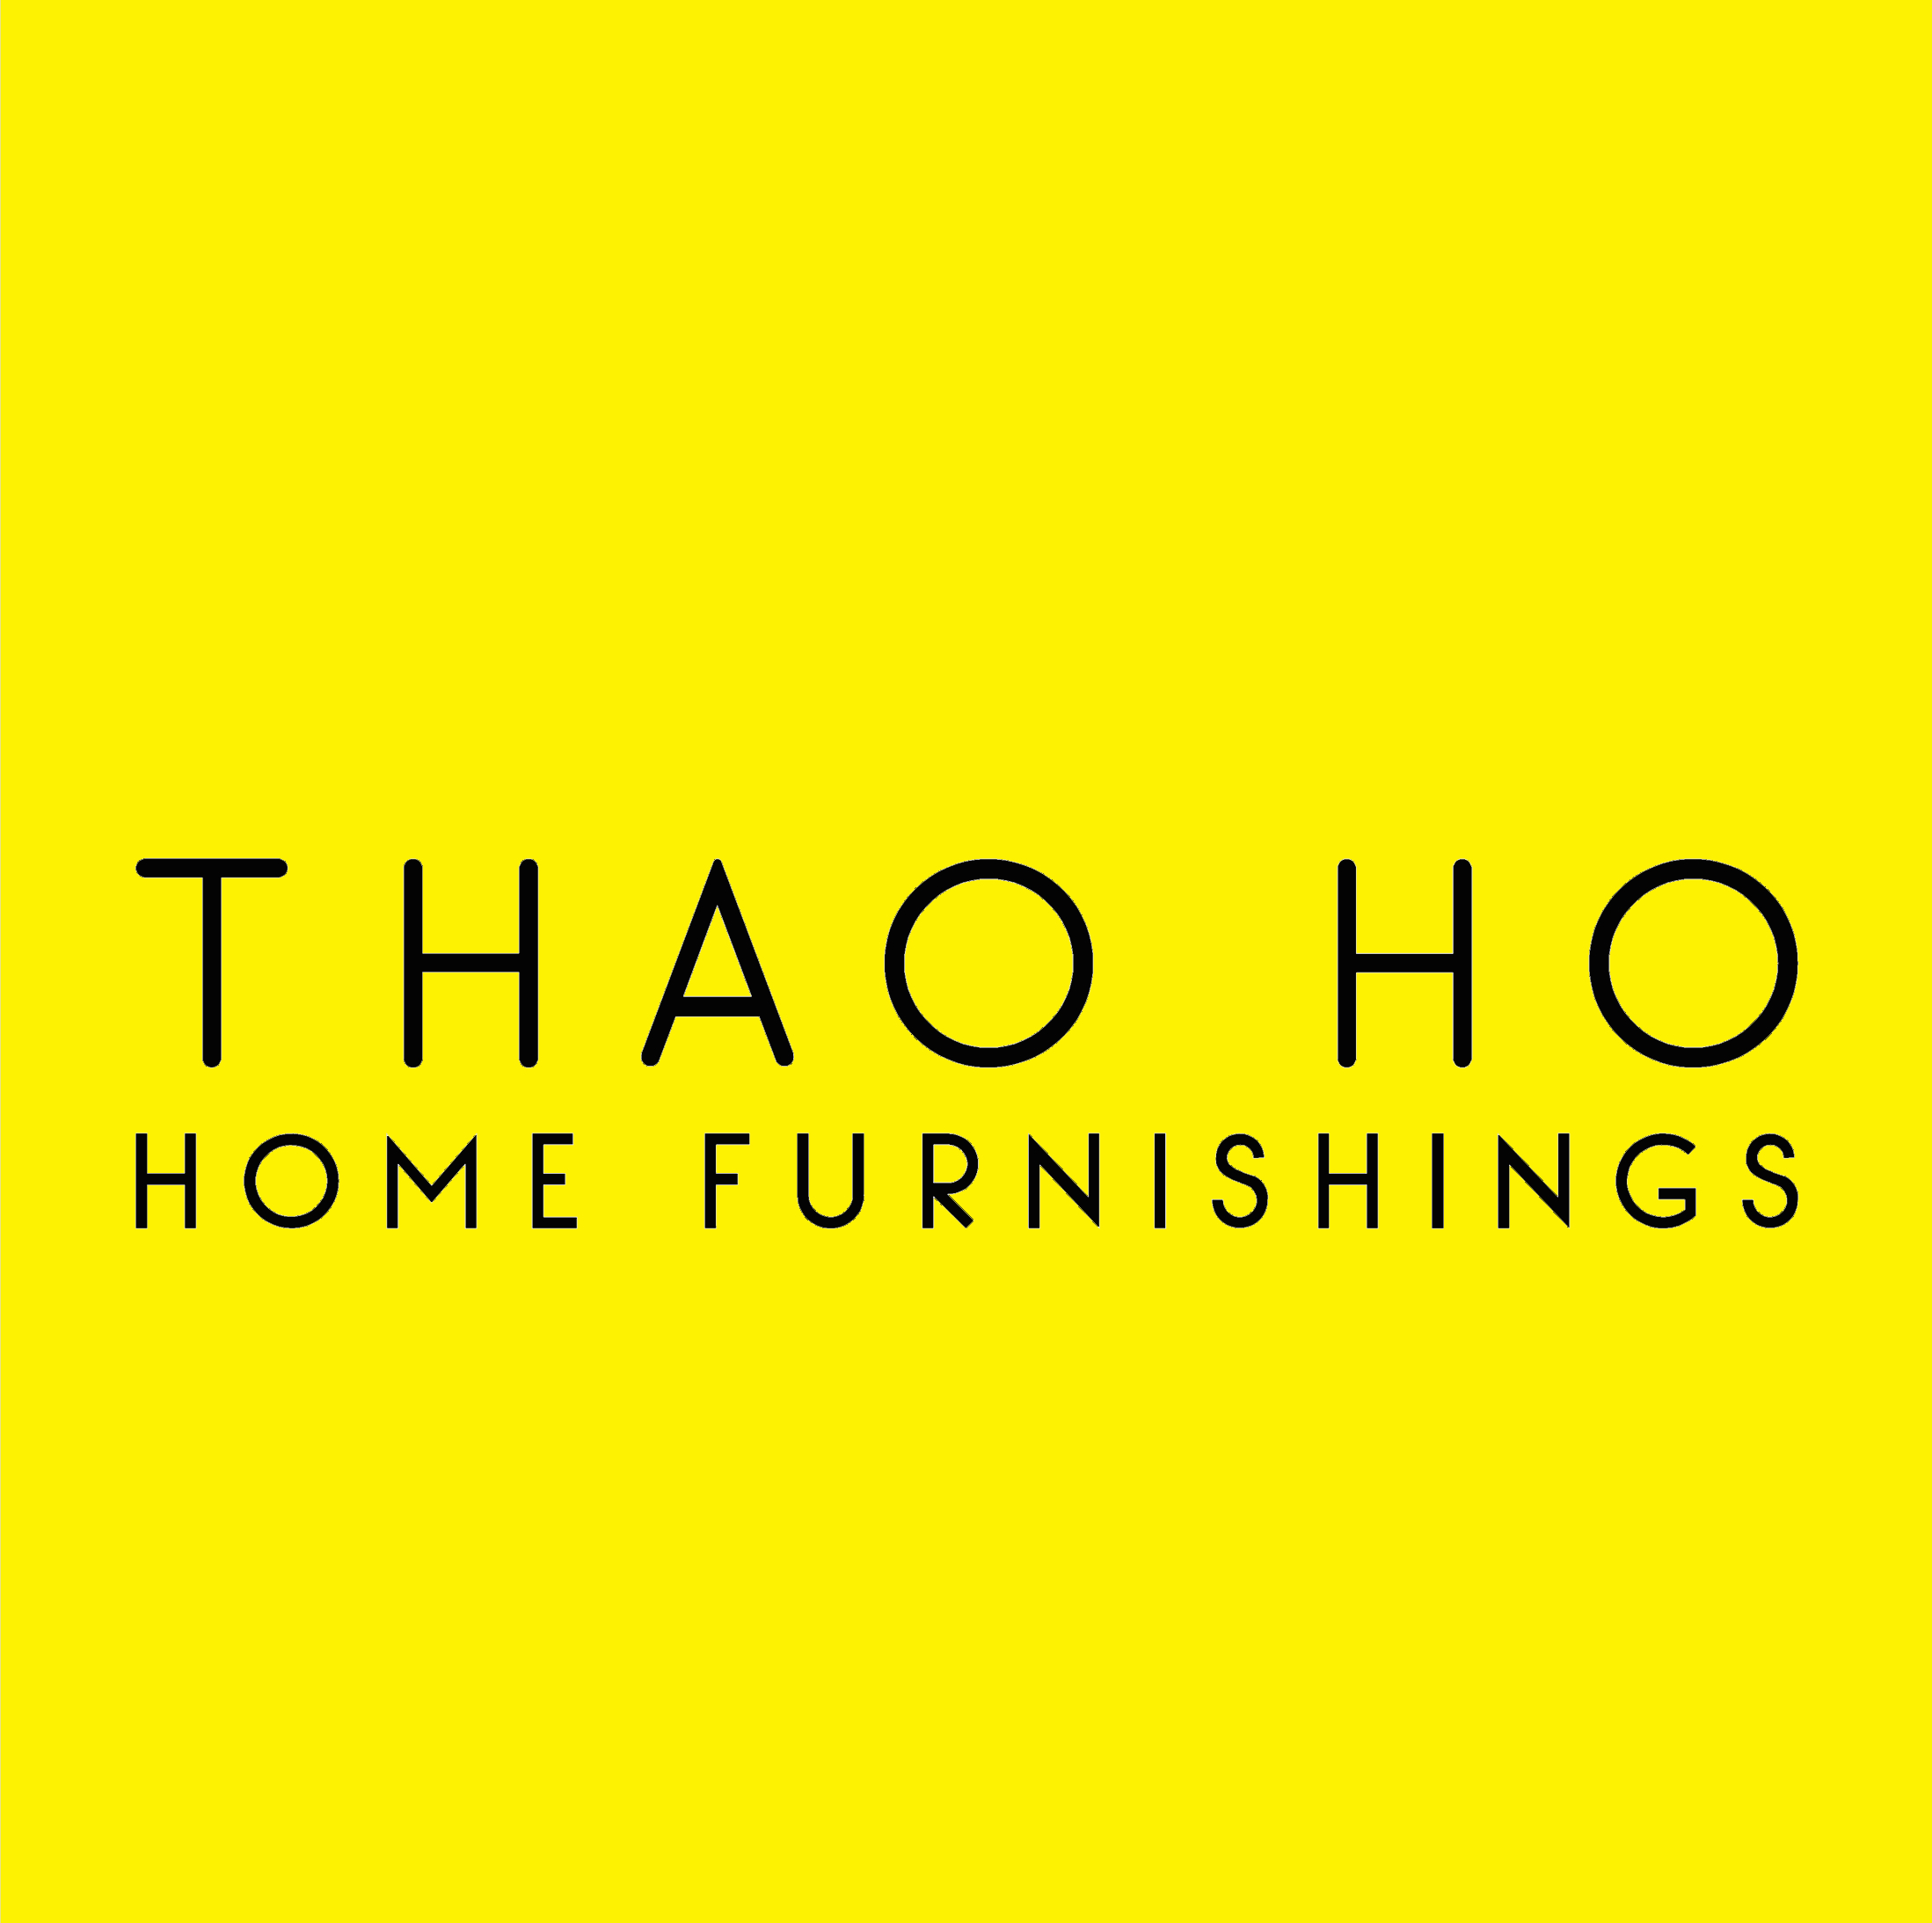 home furnishings